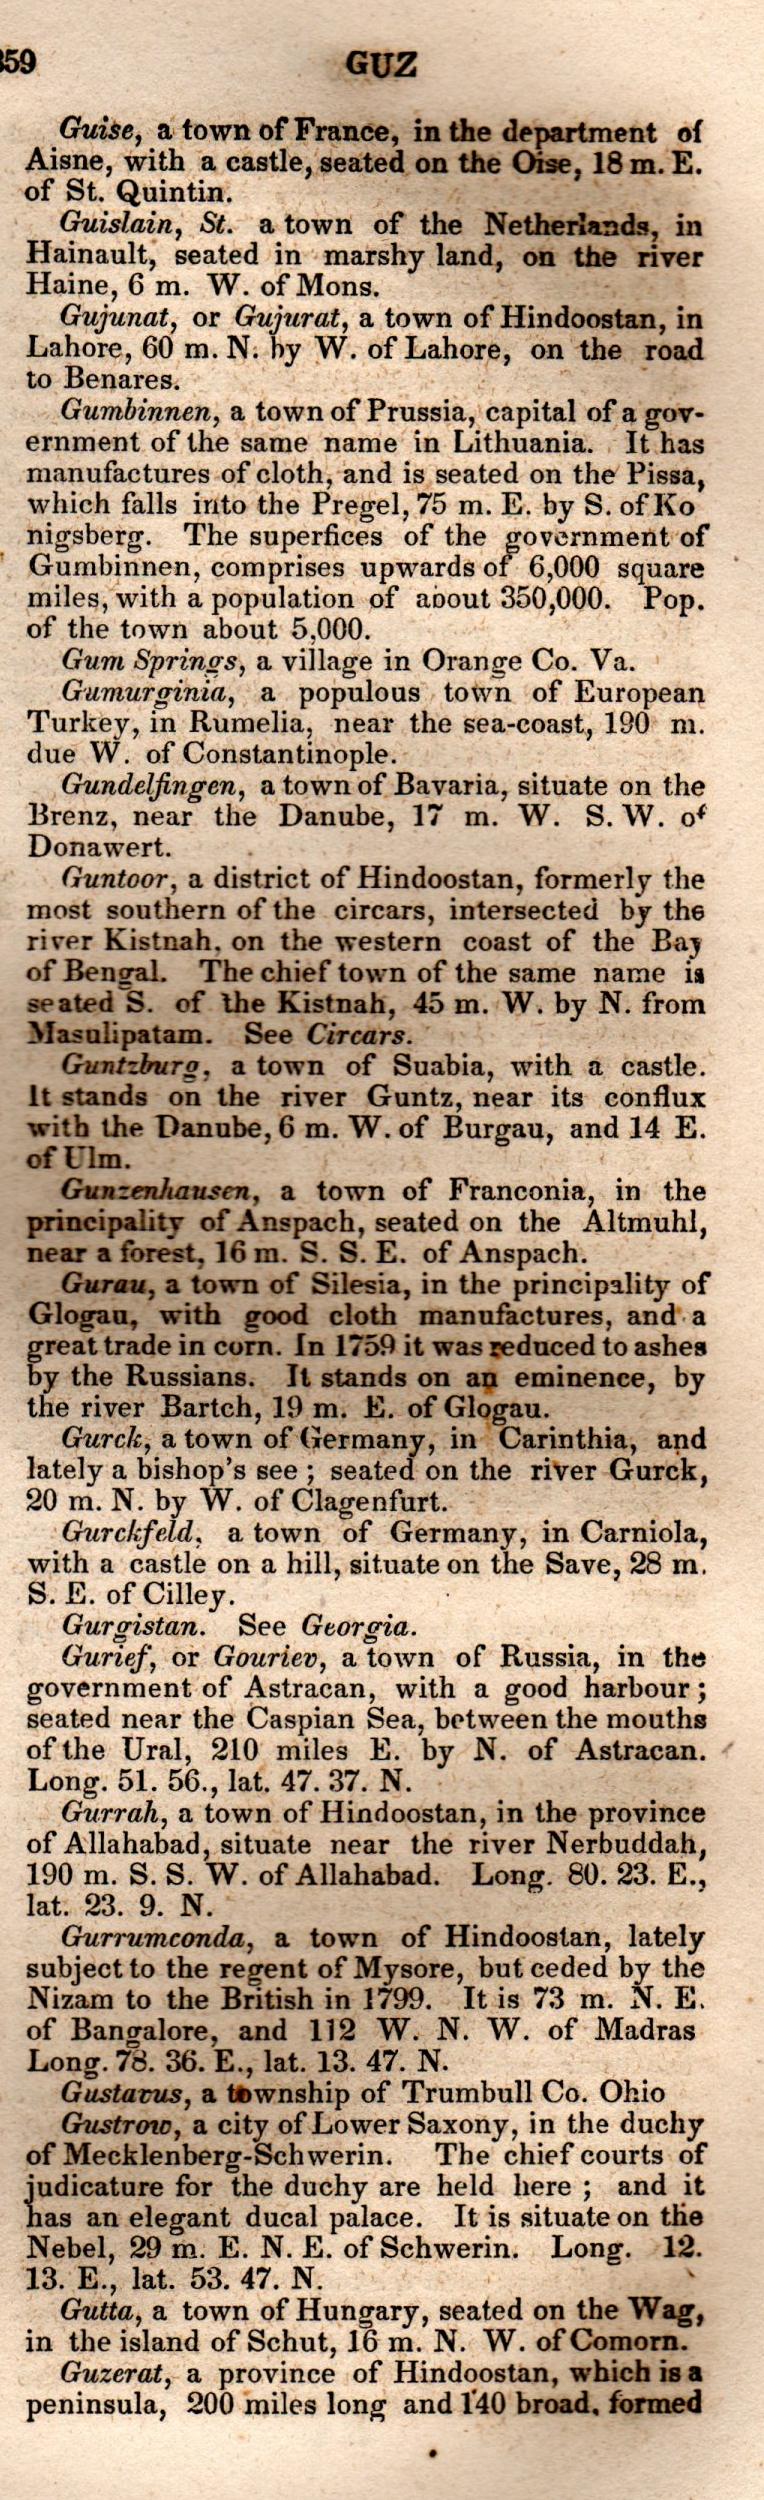 Brookes’ Universal Gazetteer (1850), Page 359 Right Column